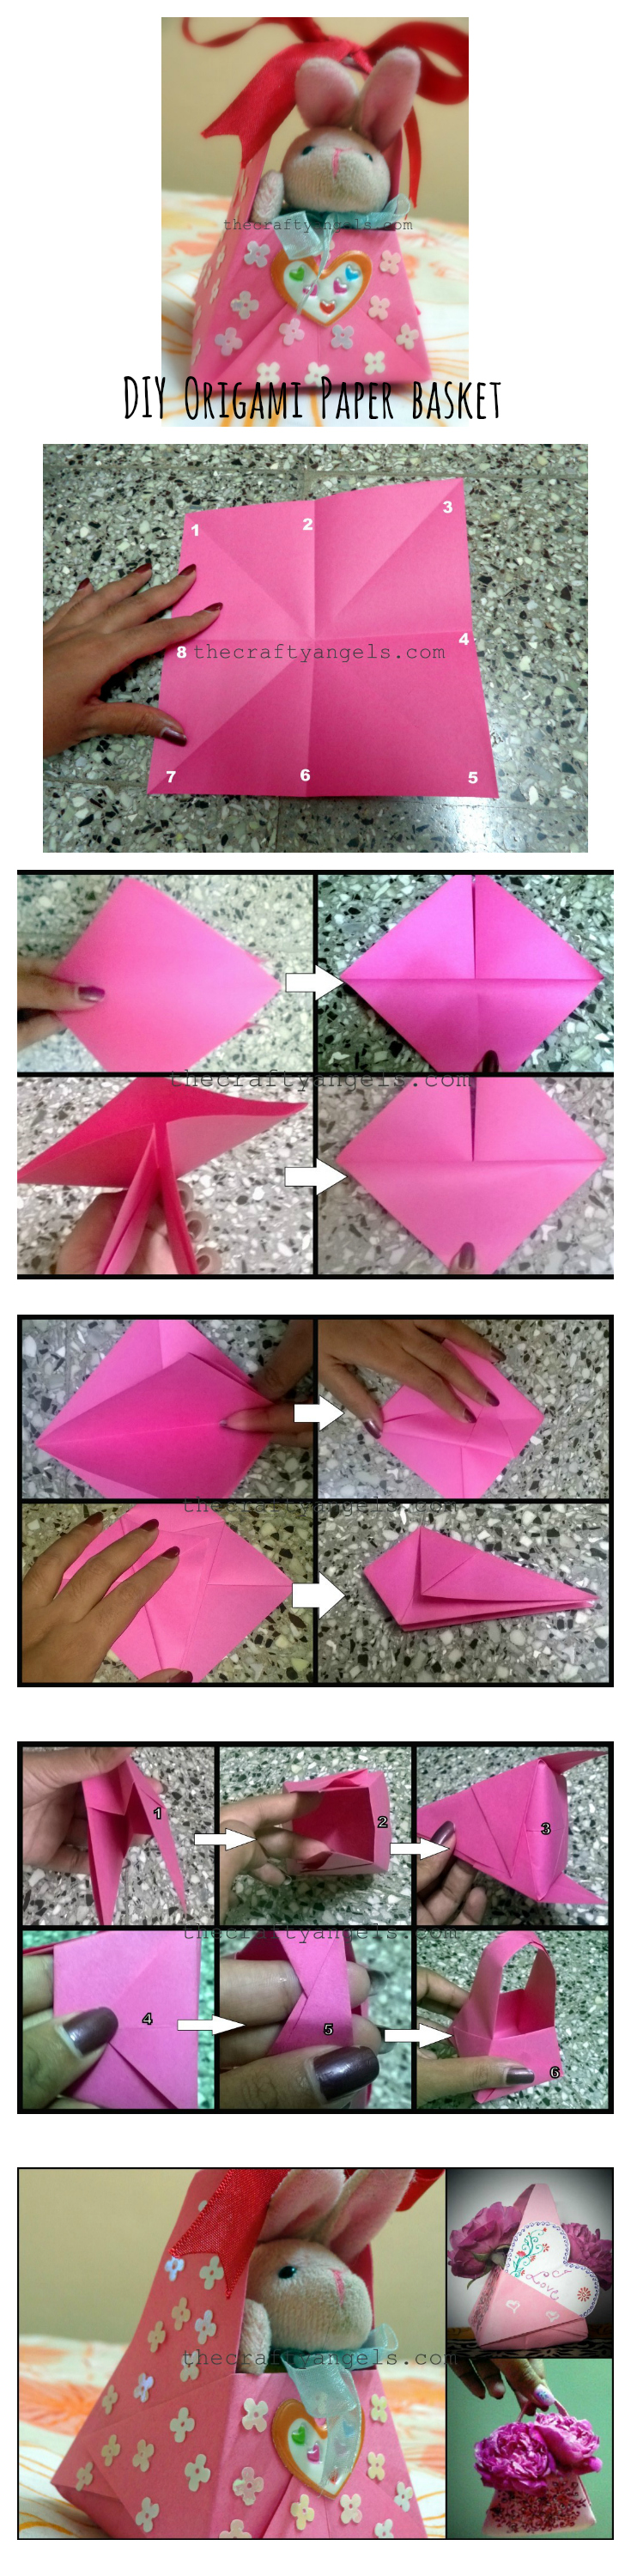 DIY Origami paper basket collage